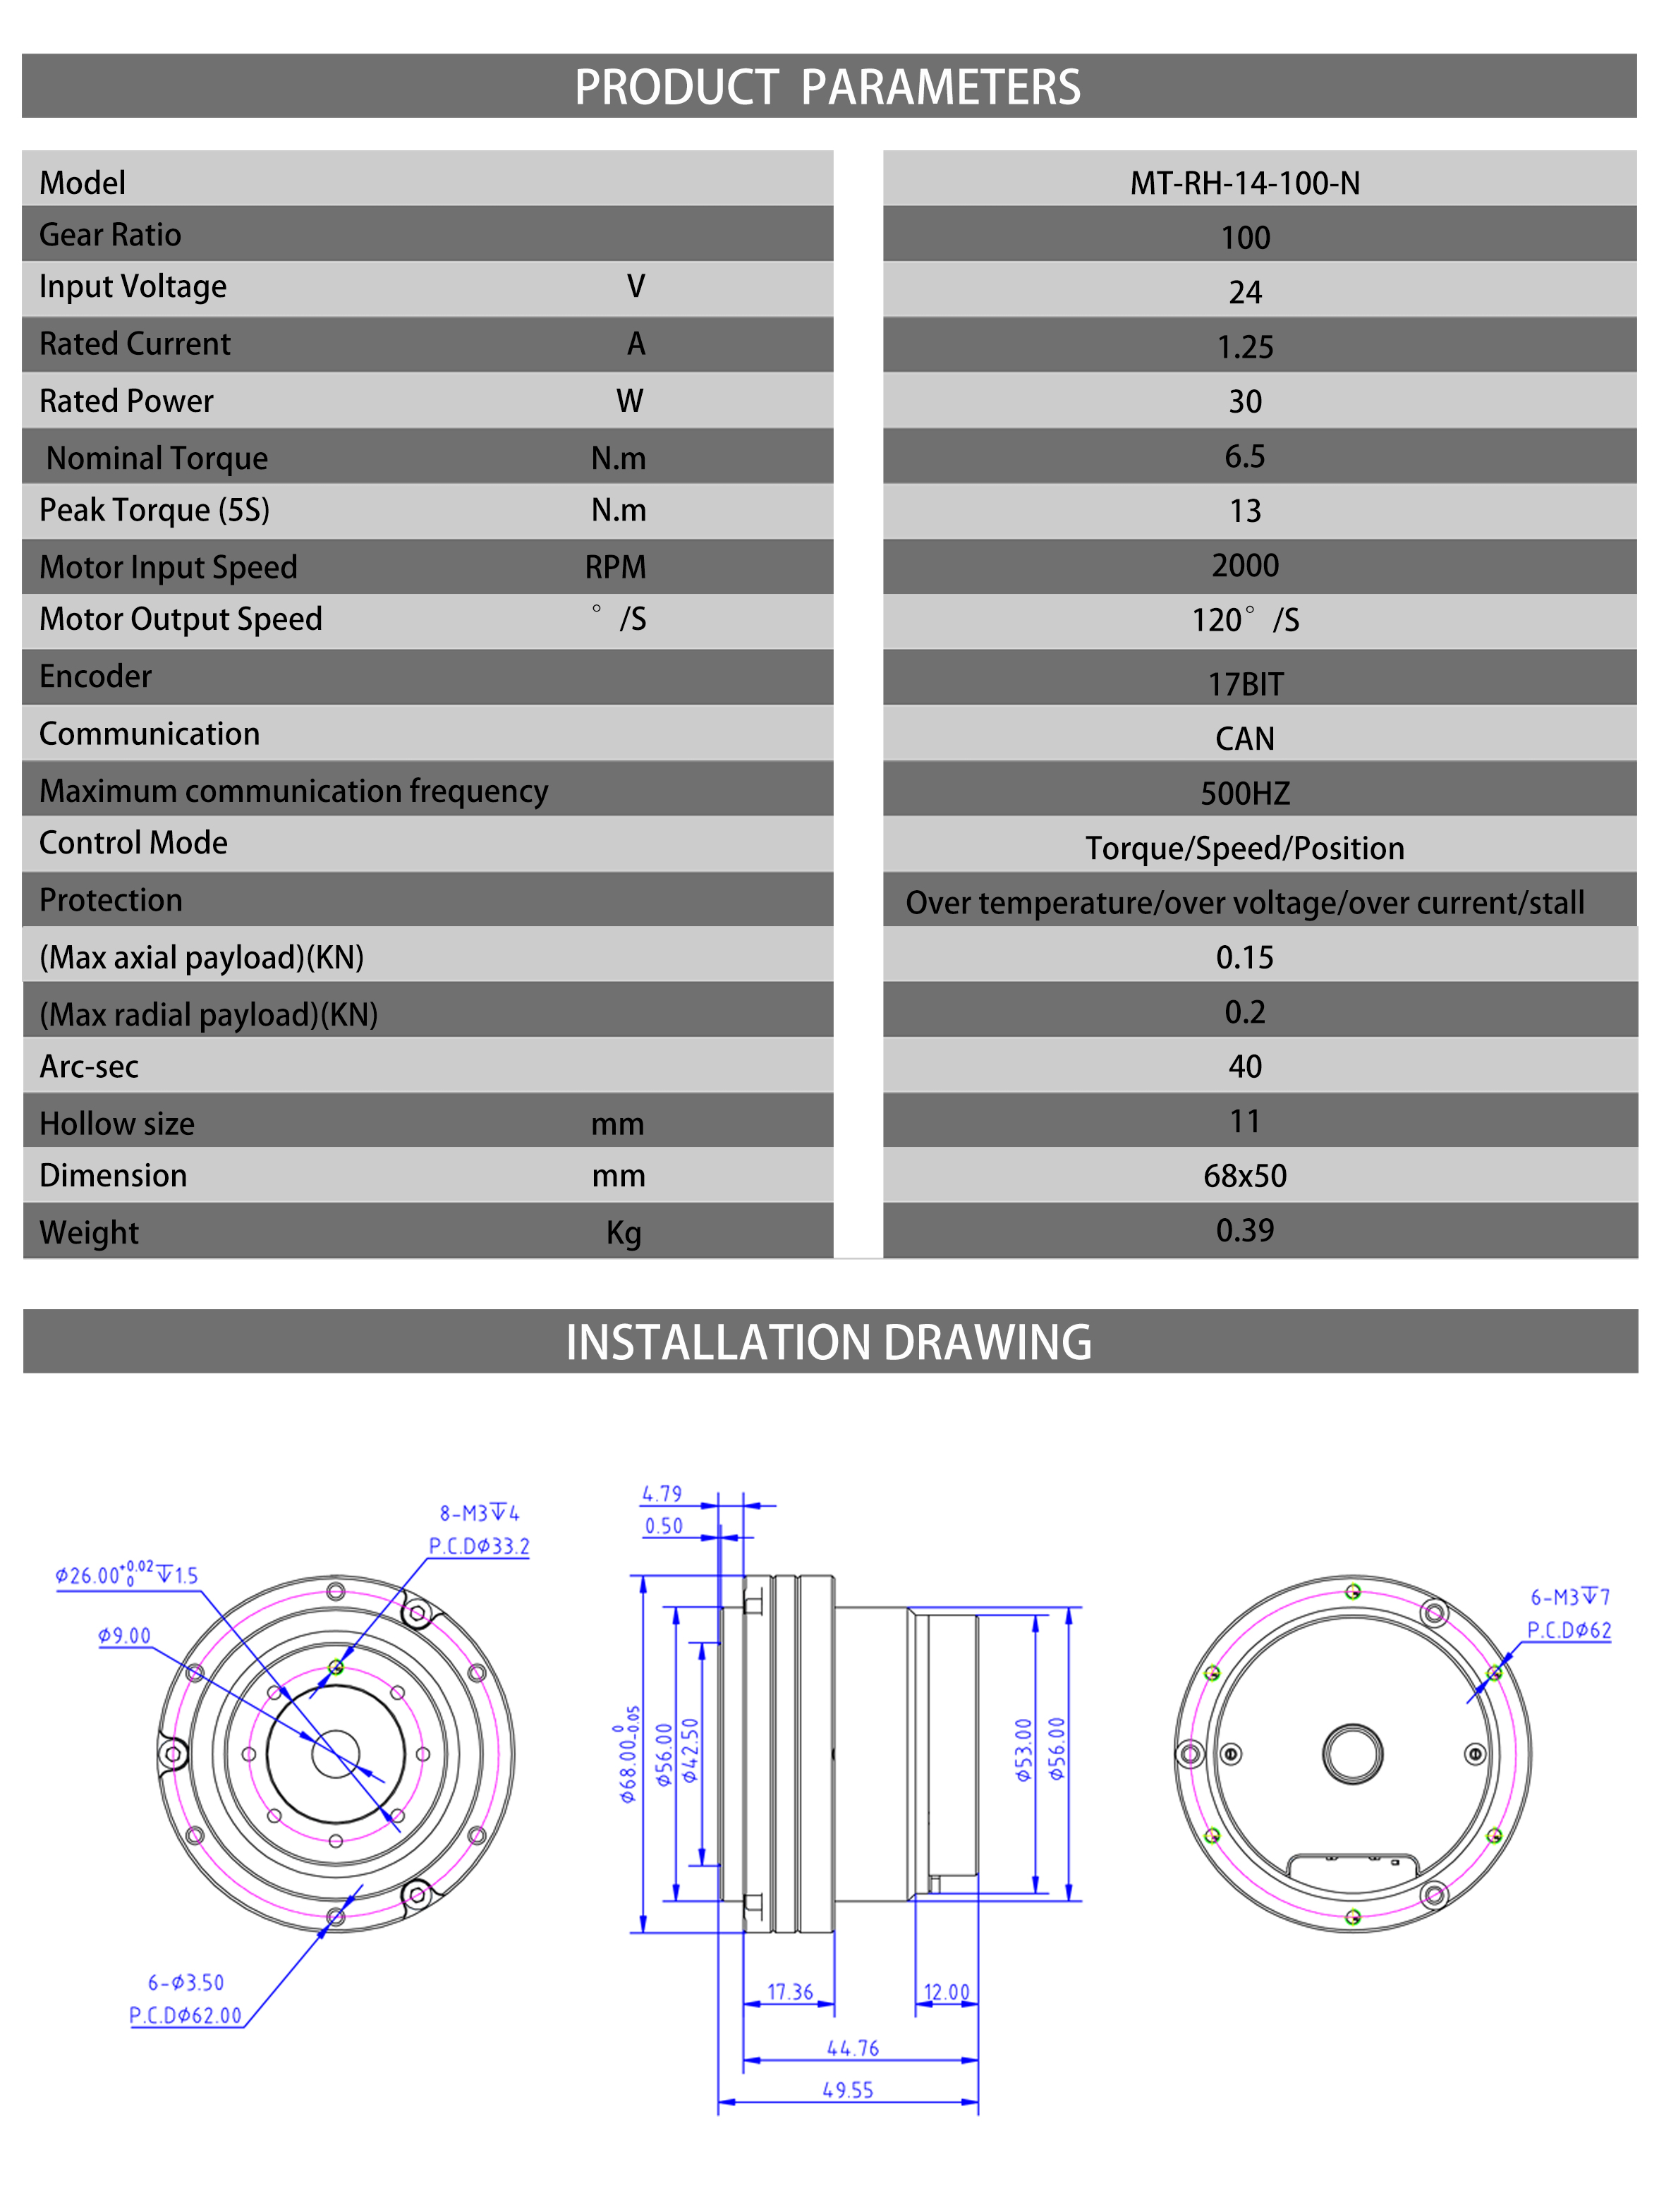 MT-RH-14-100-N Series Hollow shaft motor Harmonic drive reducer 100 to 1 actuator